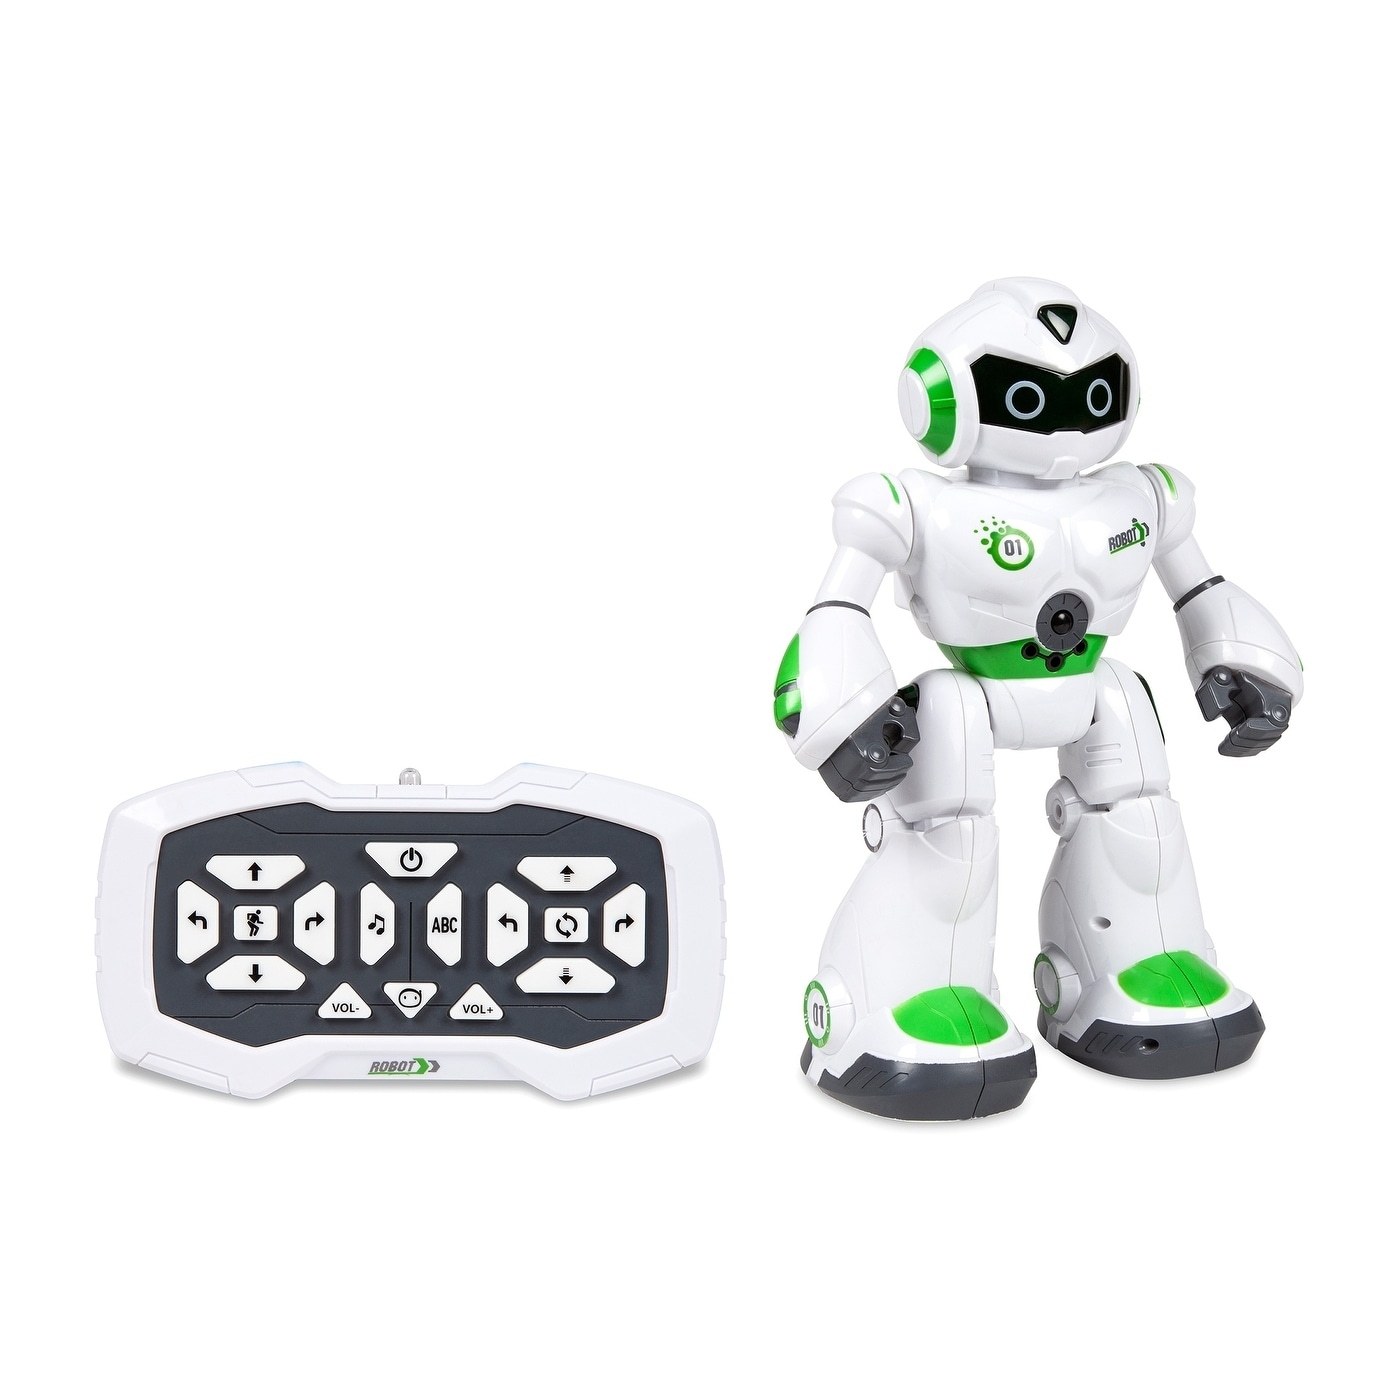 robot remote control robot